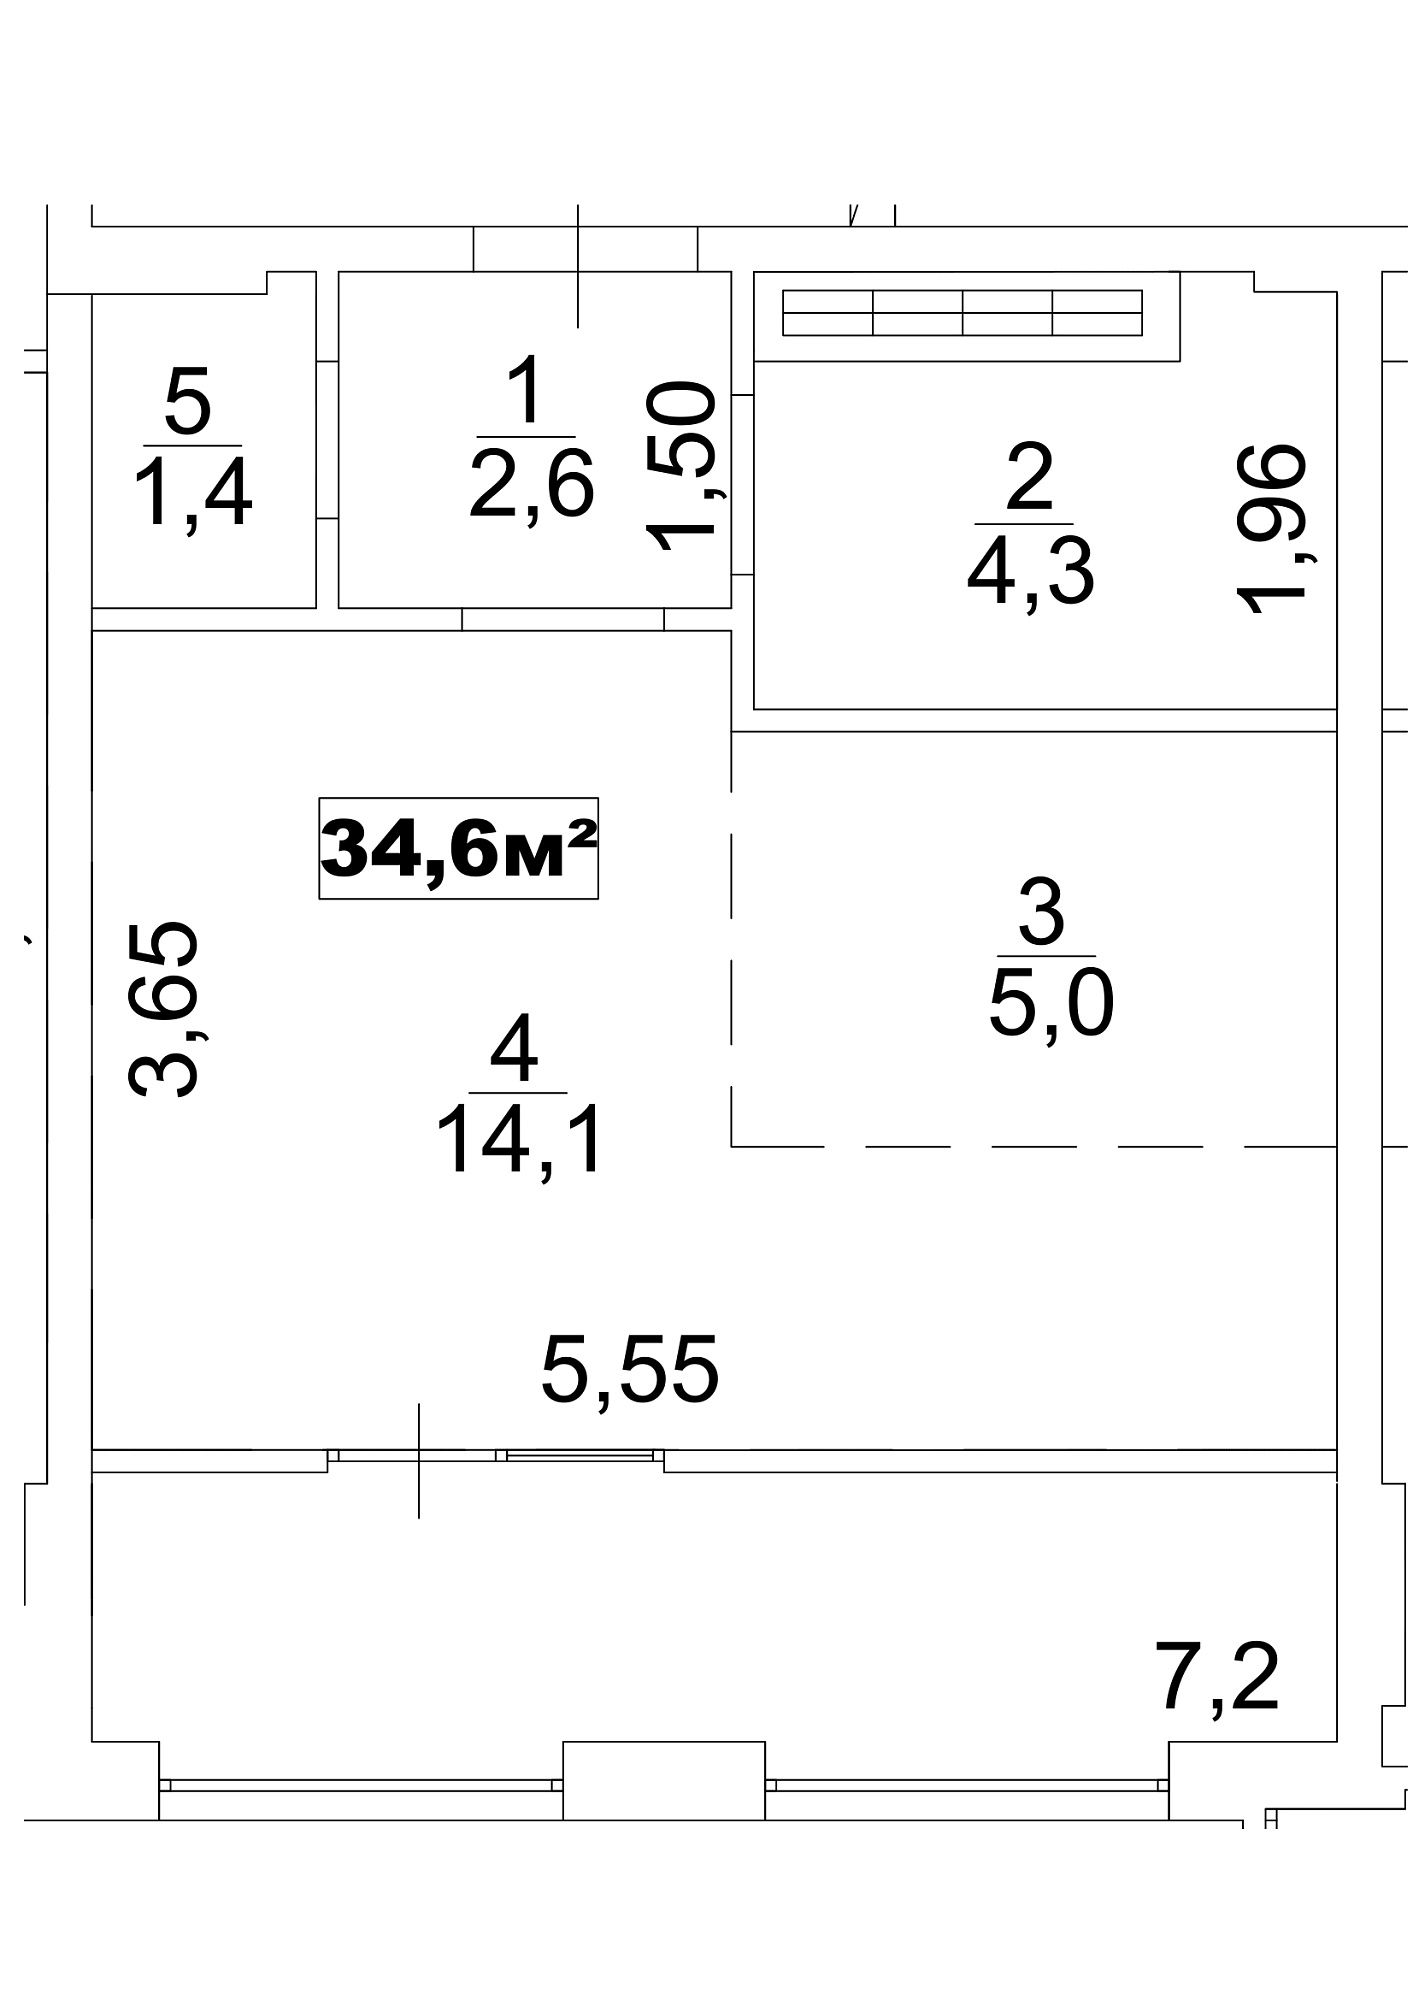 Planning Smart flats area 34.6m2, AB-13-08/00062.